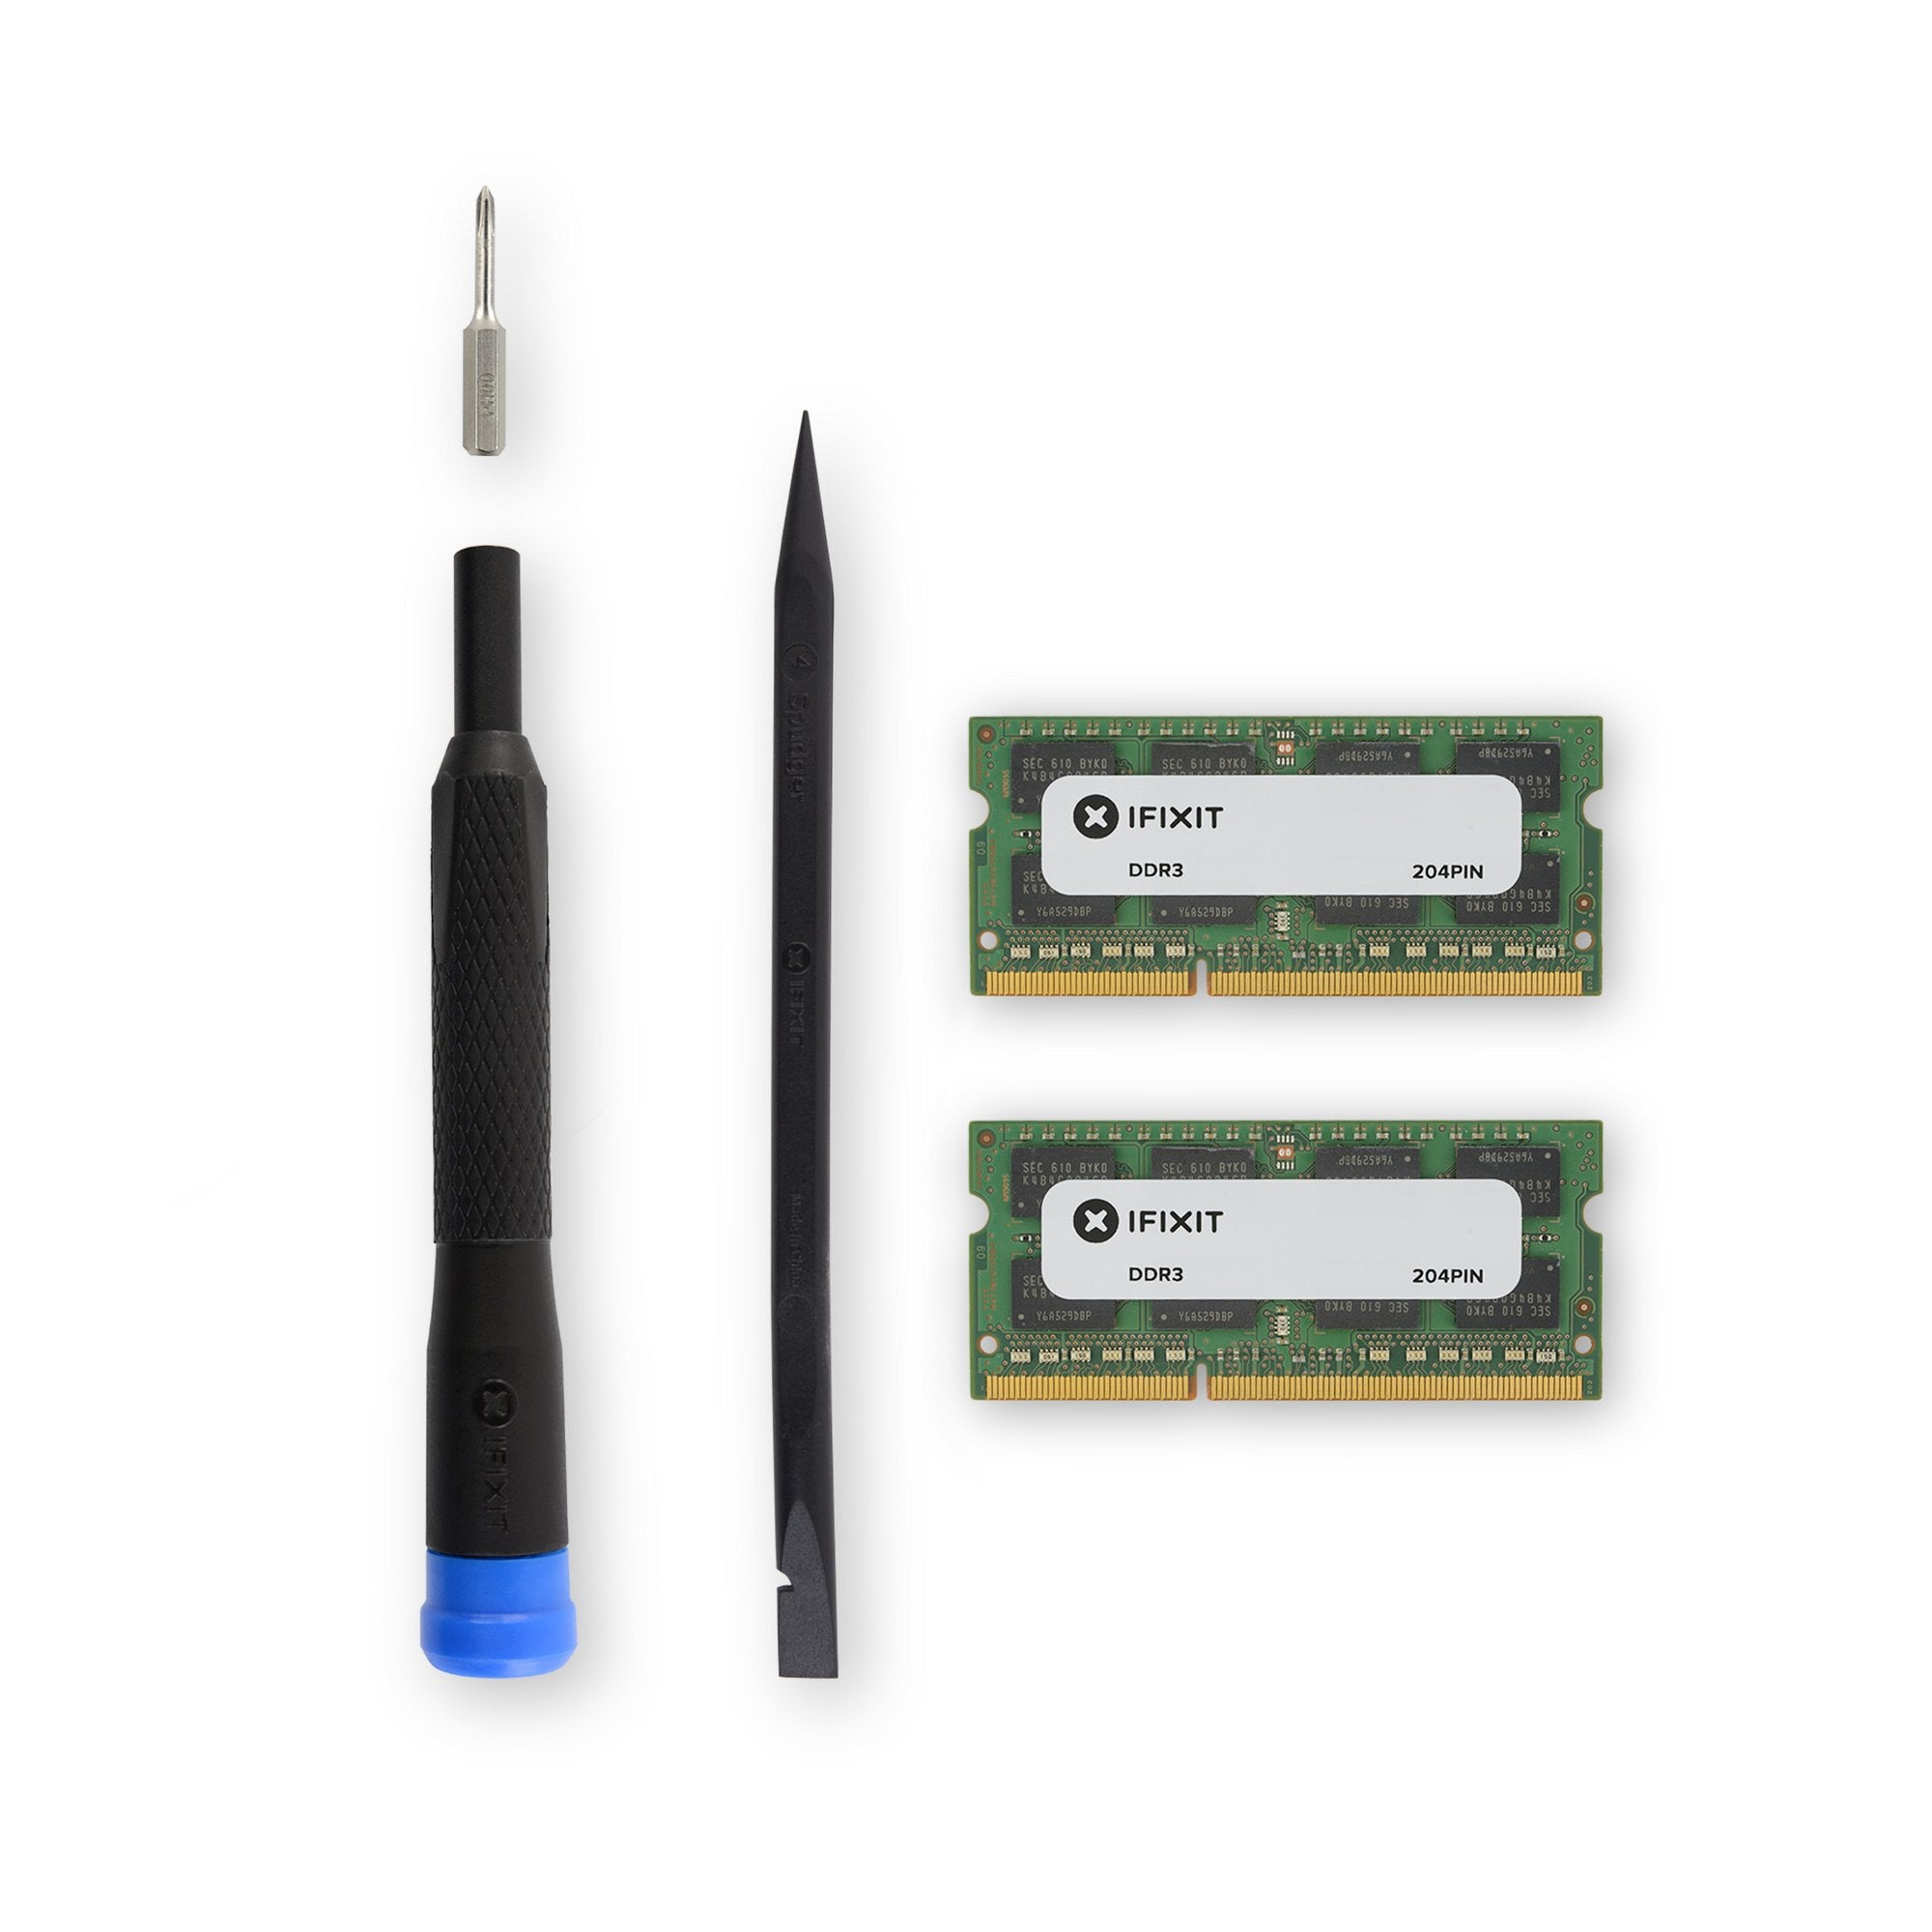 MacBook Pro 15" Unibody (Mid 2010) Memory Maxxer RAM Upgrade Kit New